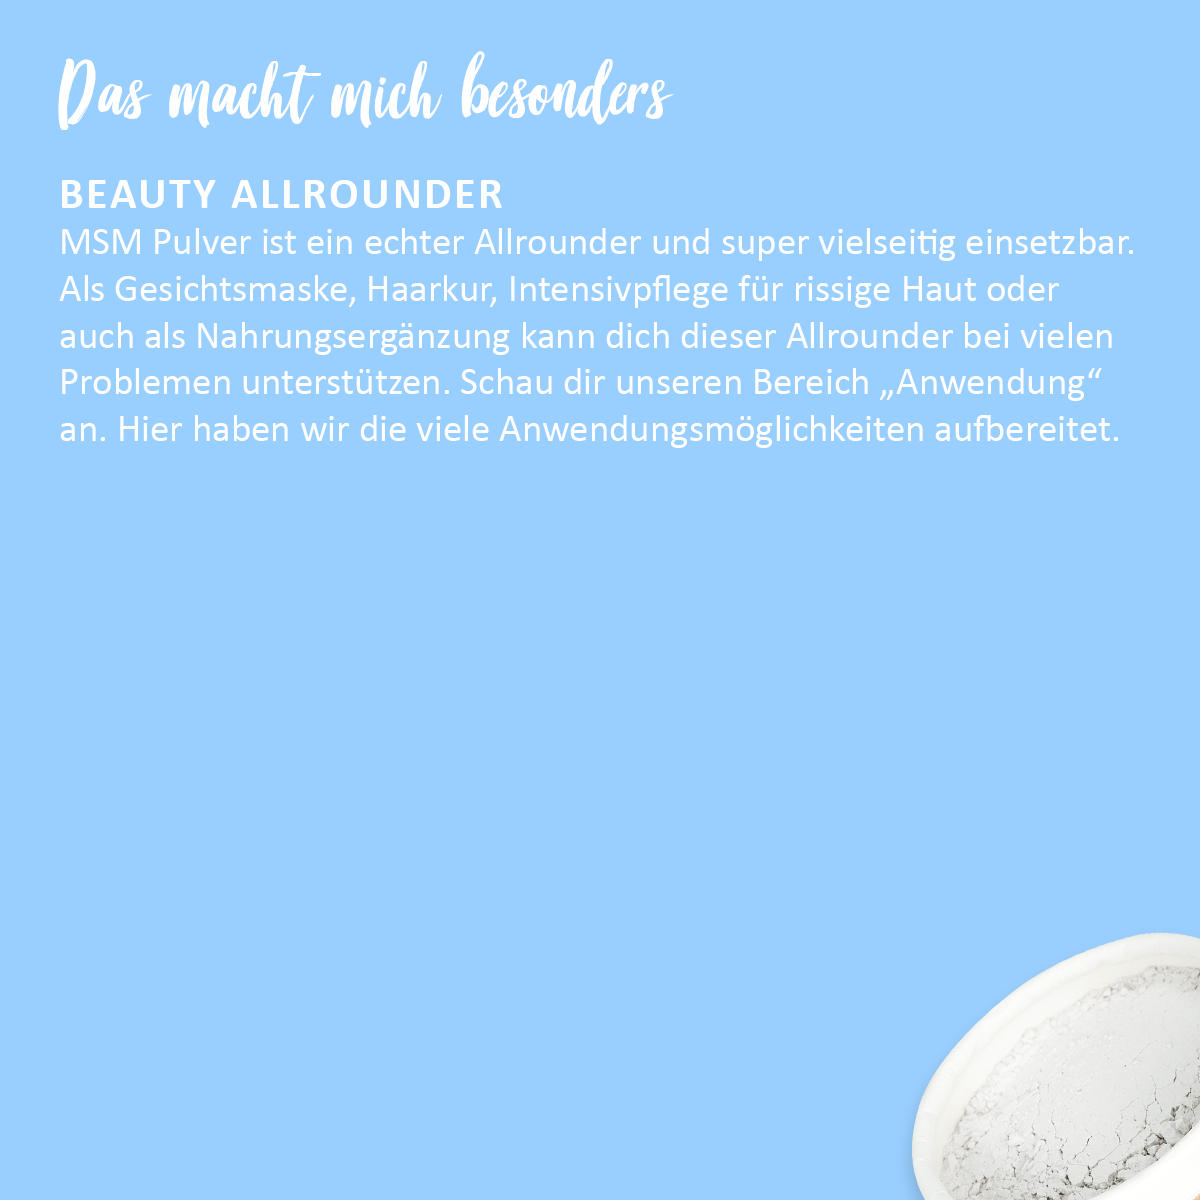 Beauty all-rounder 'MSM powder'